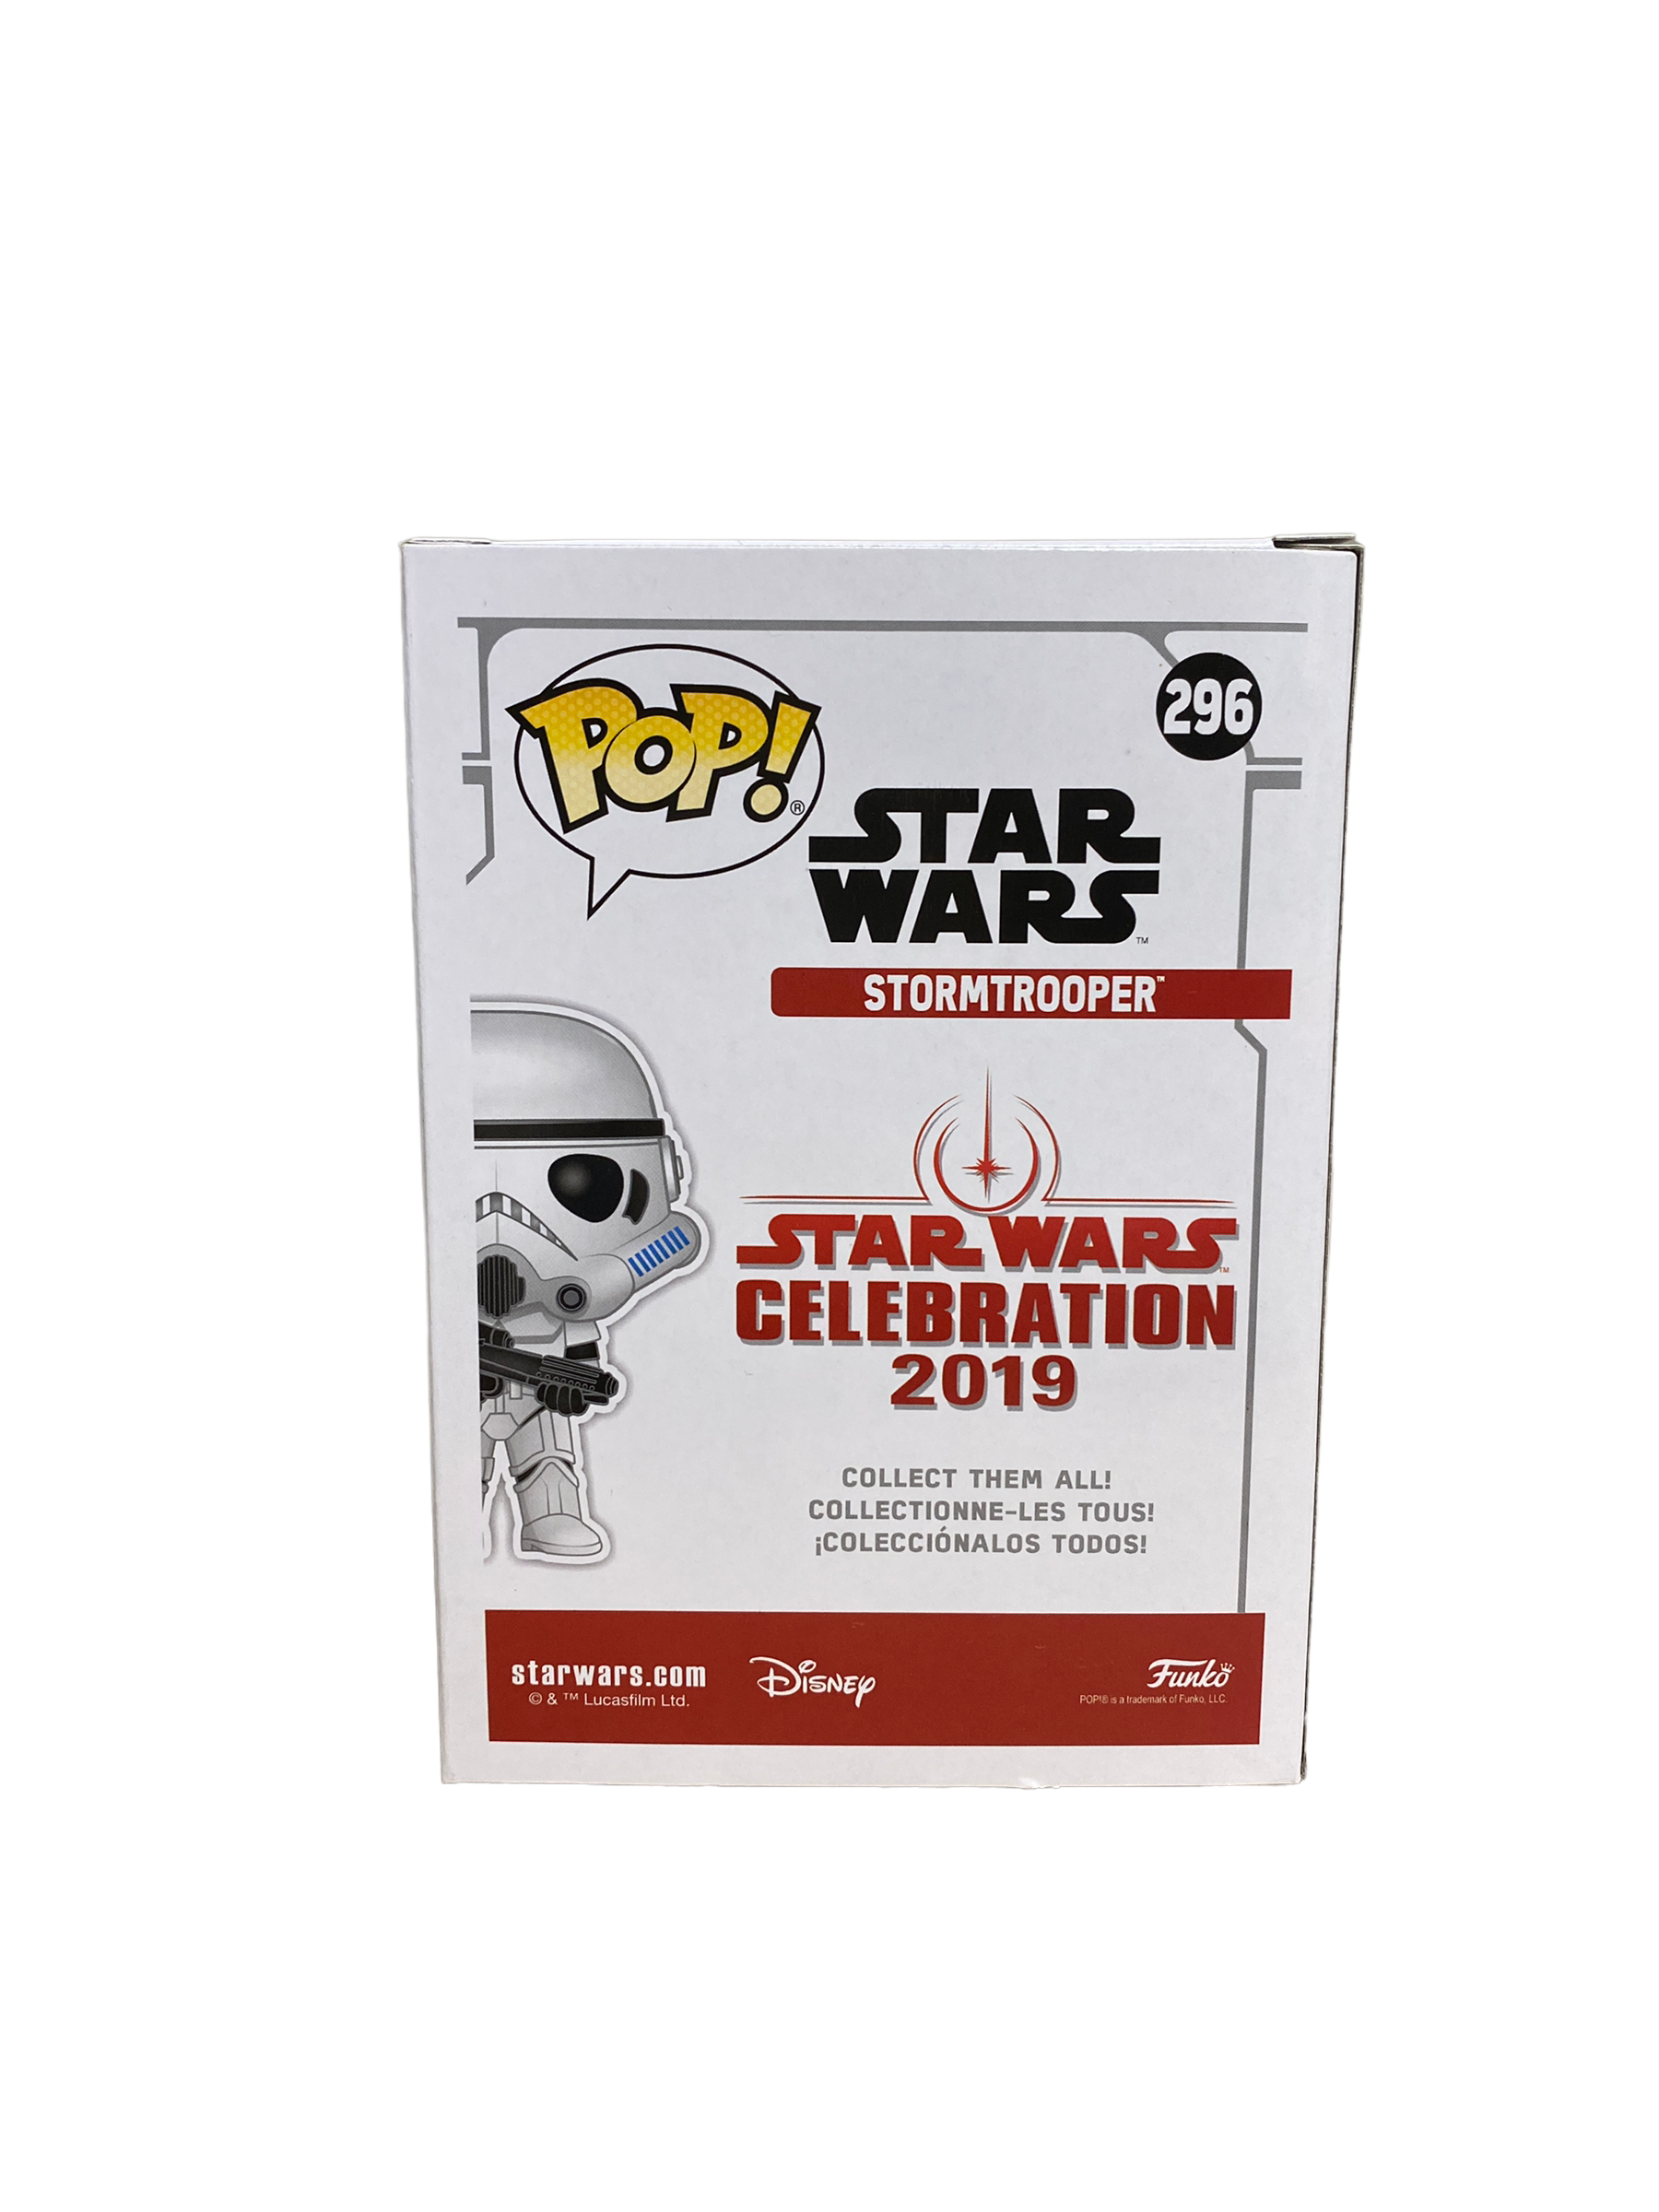 Stormtrooper #296 (Blue Chrome) Funko Pop! - Star Wars - Chicago 2019 Star Wars Celebration Exclusive LE2500 Pcs - Condition 8.5/10